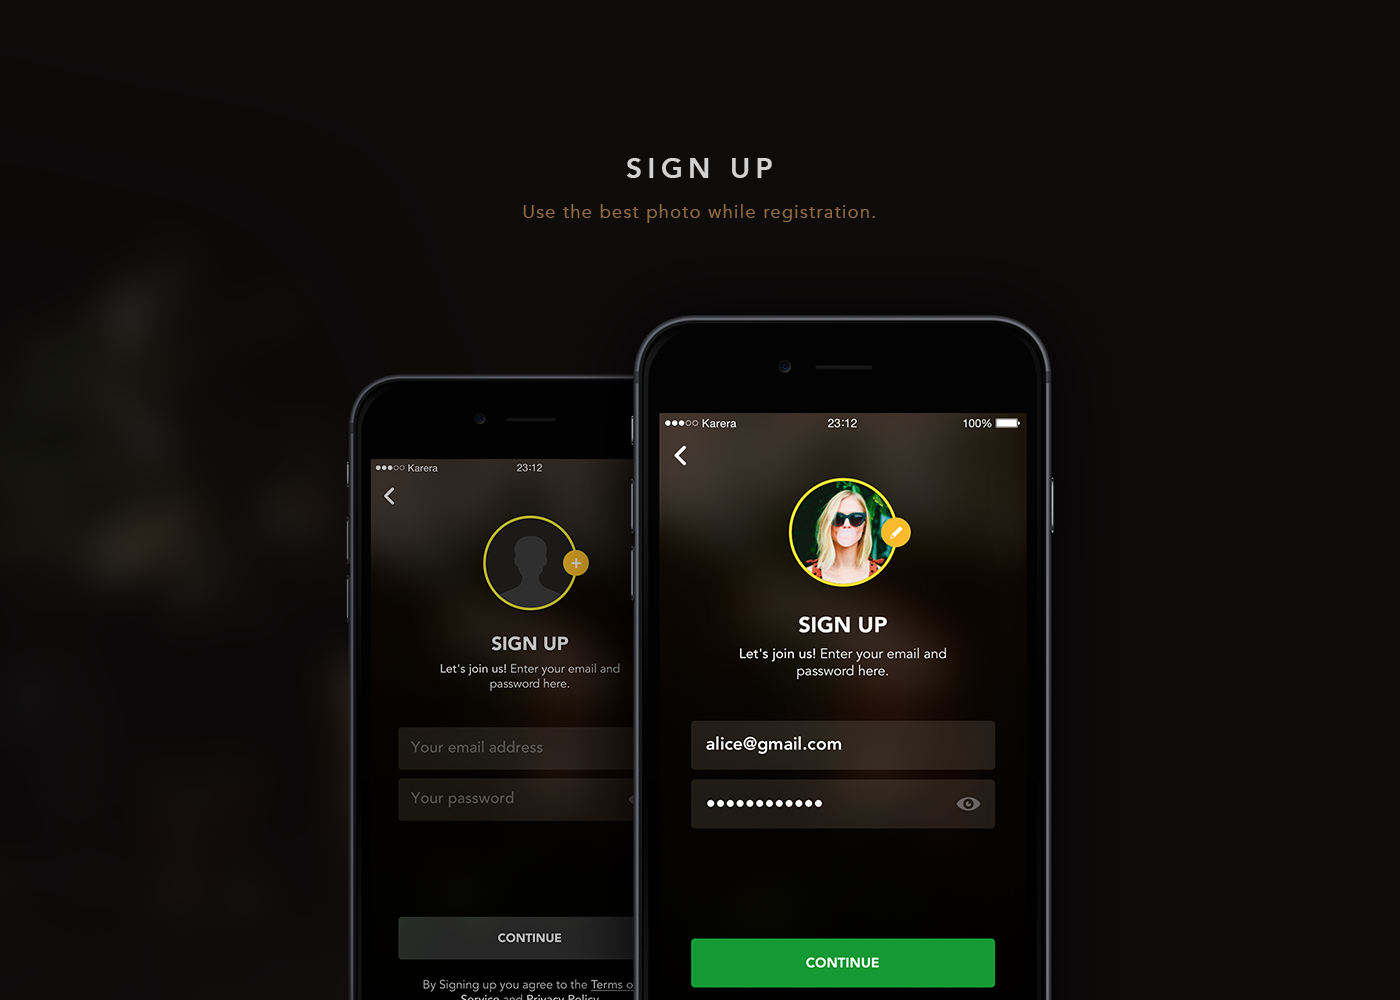 app iphone application mobile visual interaction Ossmium UI ux photo design Food  Interface social